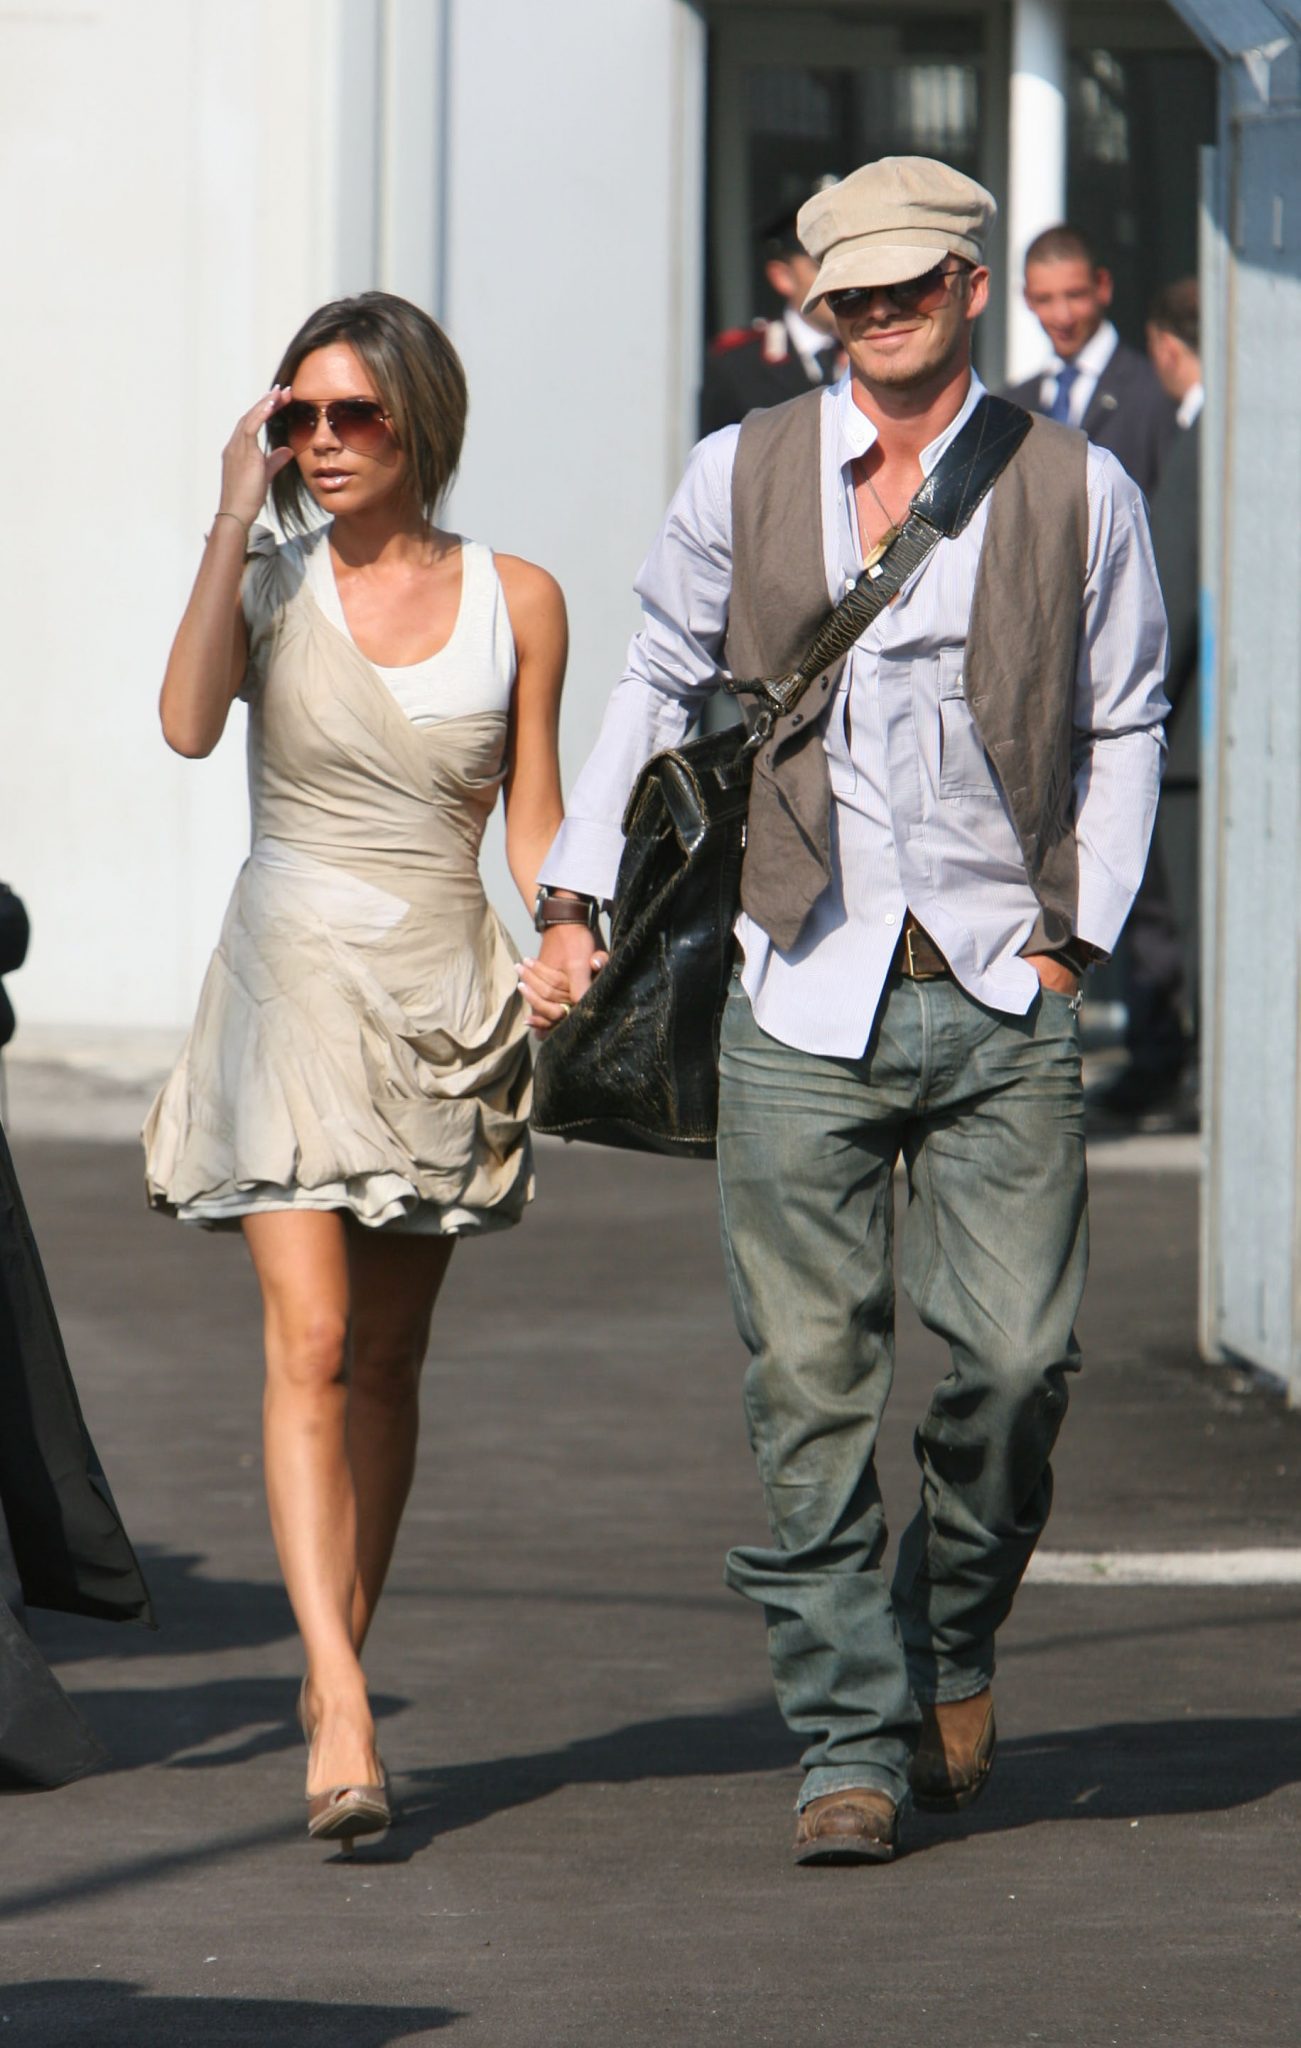 David Beckham walking on the street with Victoria Beckham